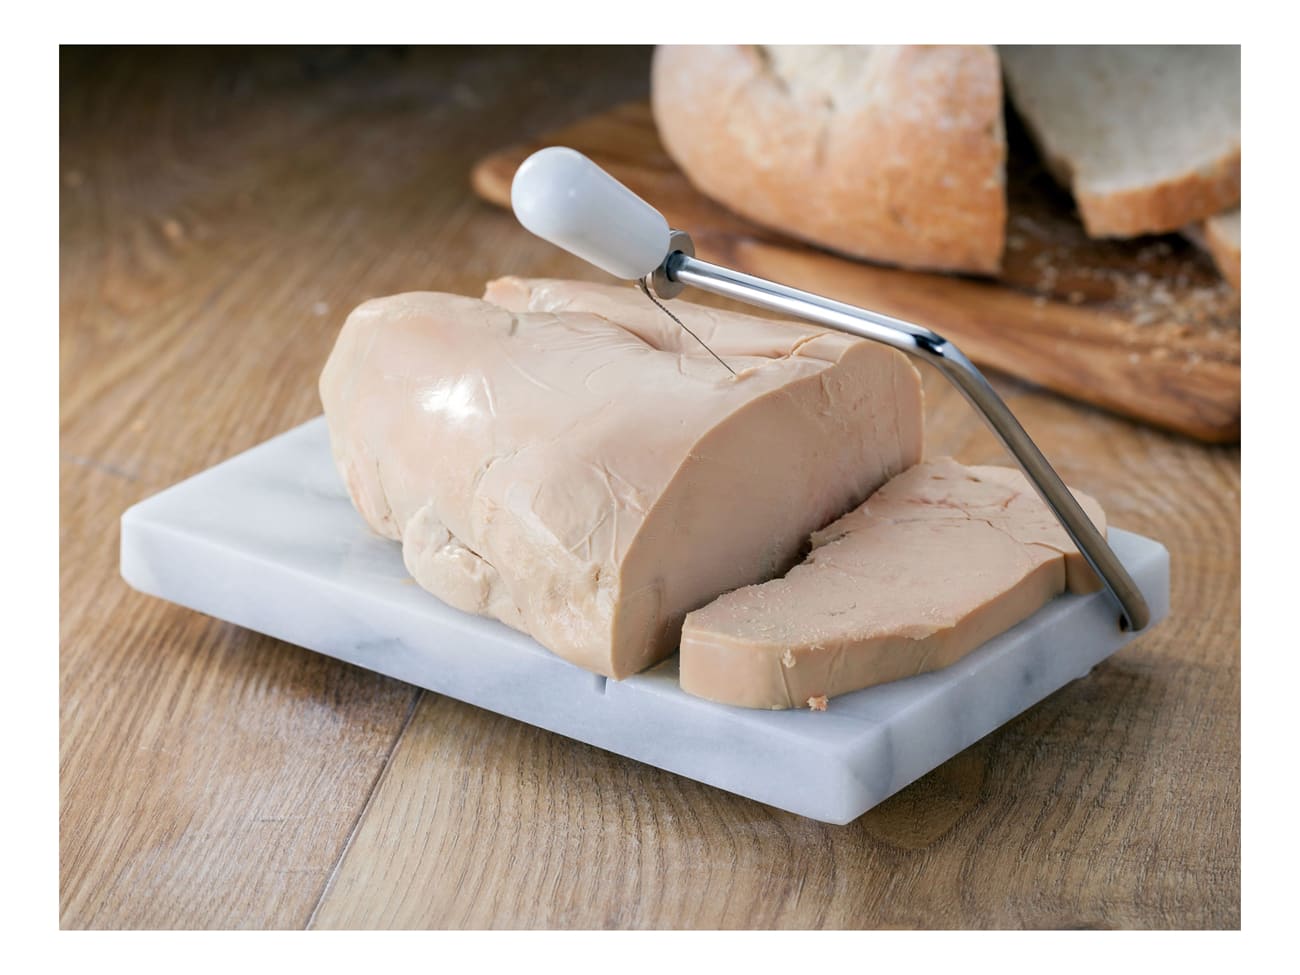 Lyre à foie gras en inox - 10 cm - Chevalier Diffusion